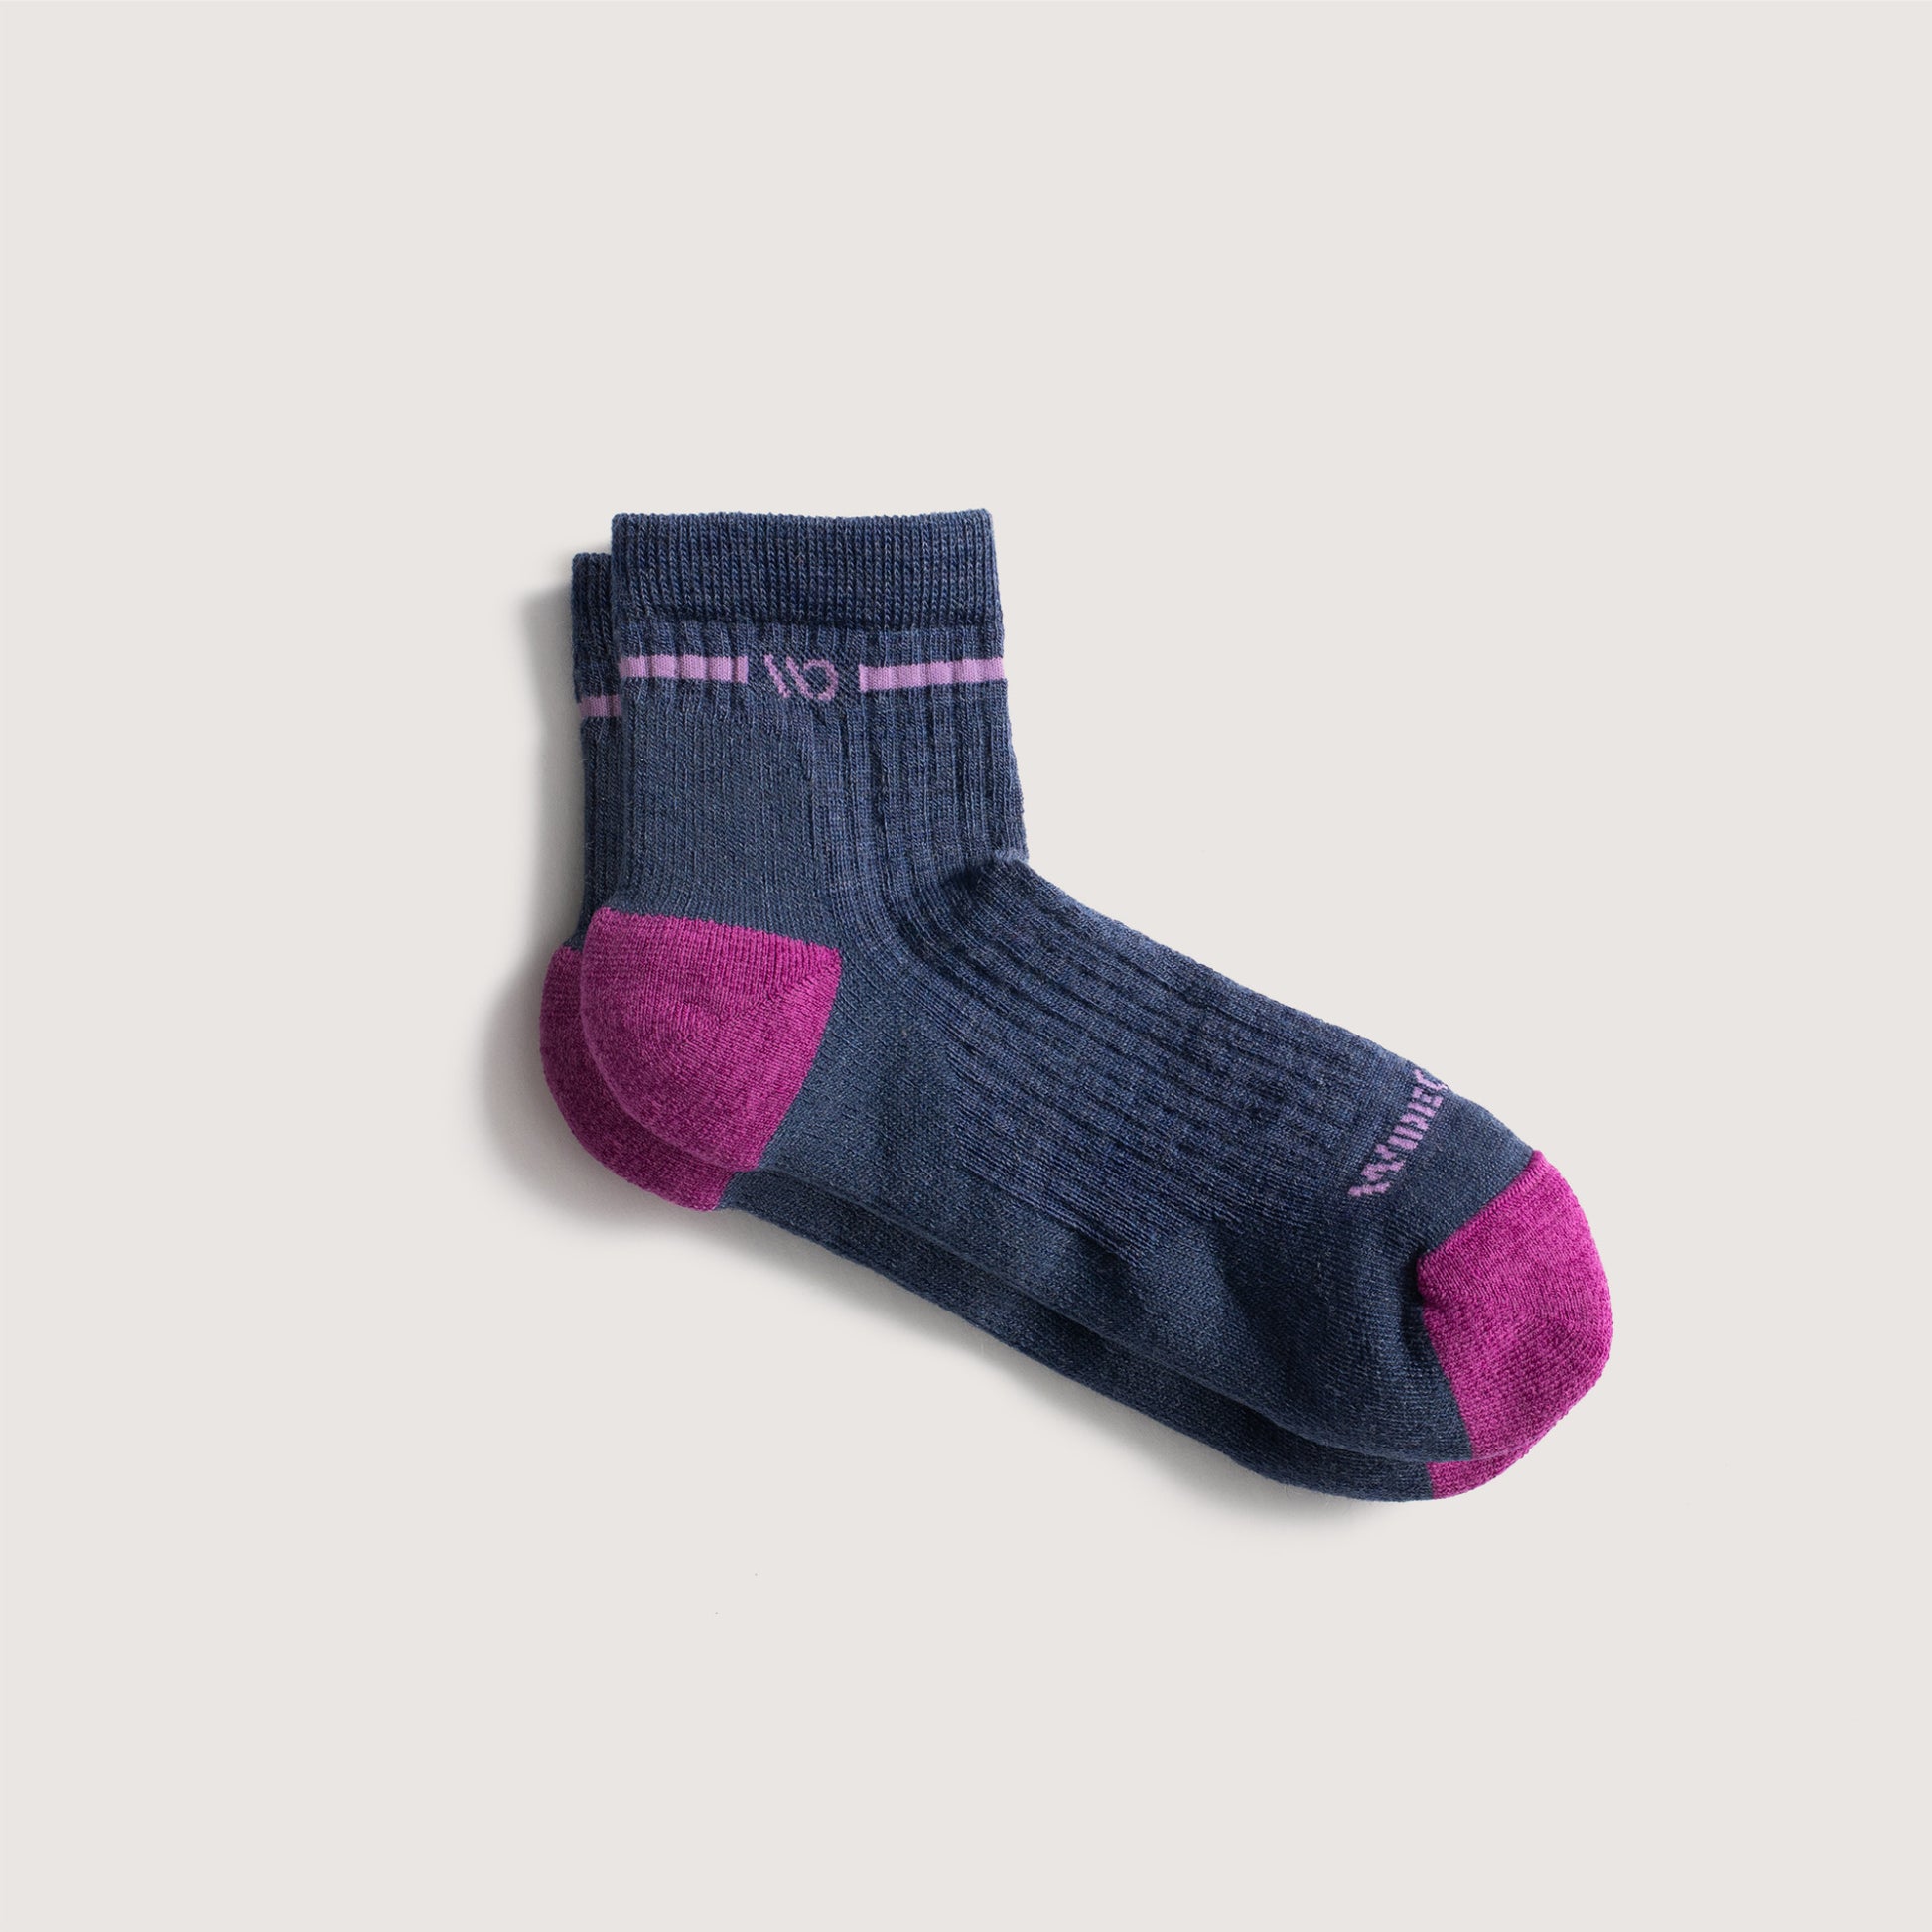 Flat socks fuchsia toe, denim body, and lavender logo and stripe under the cuff--Denim